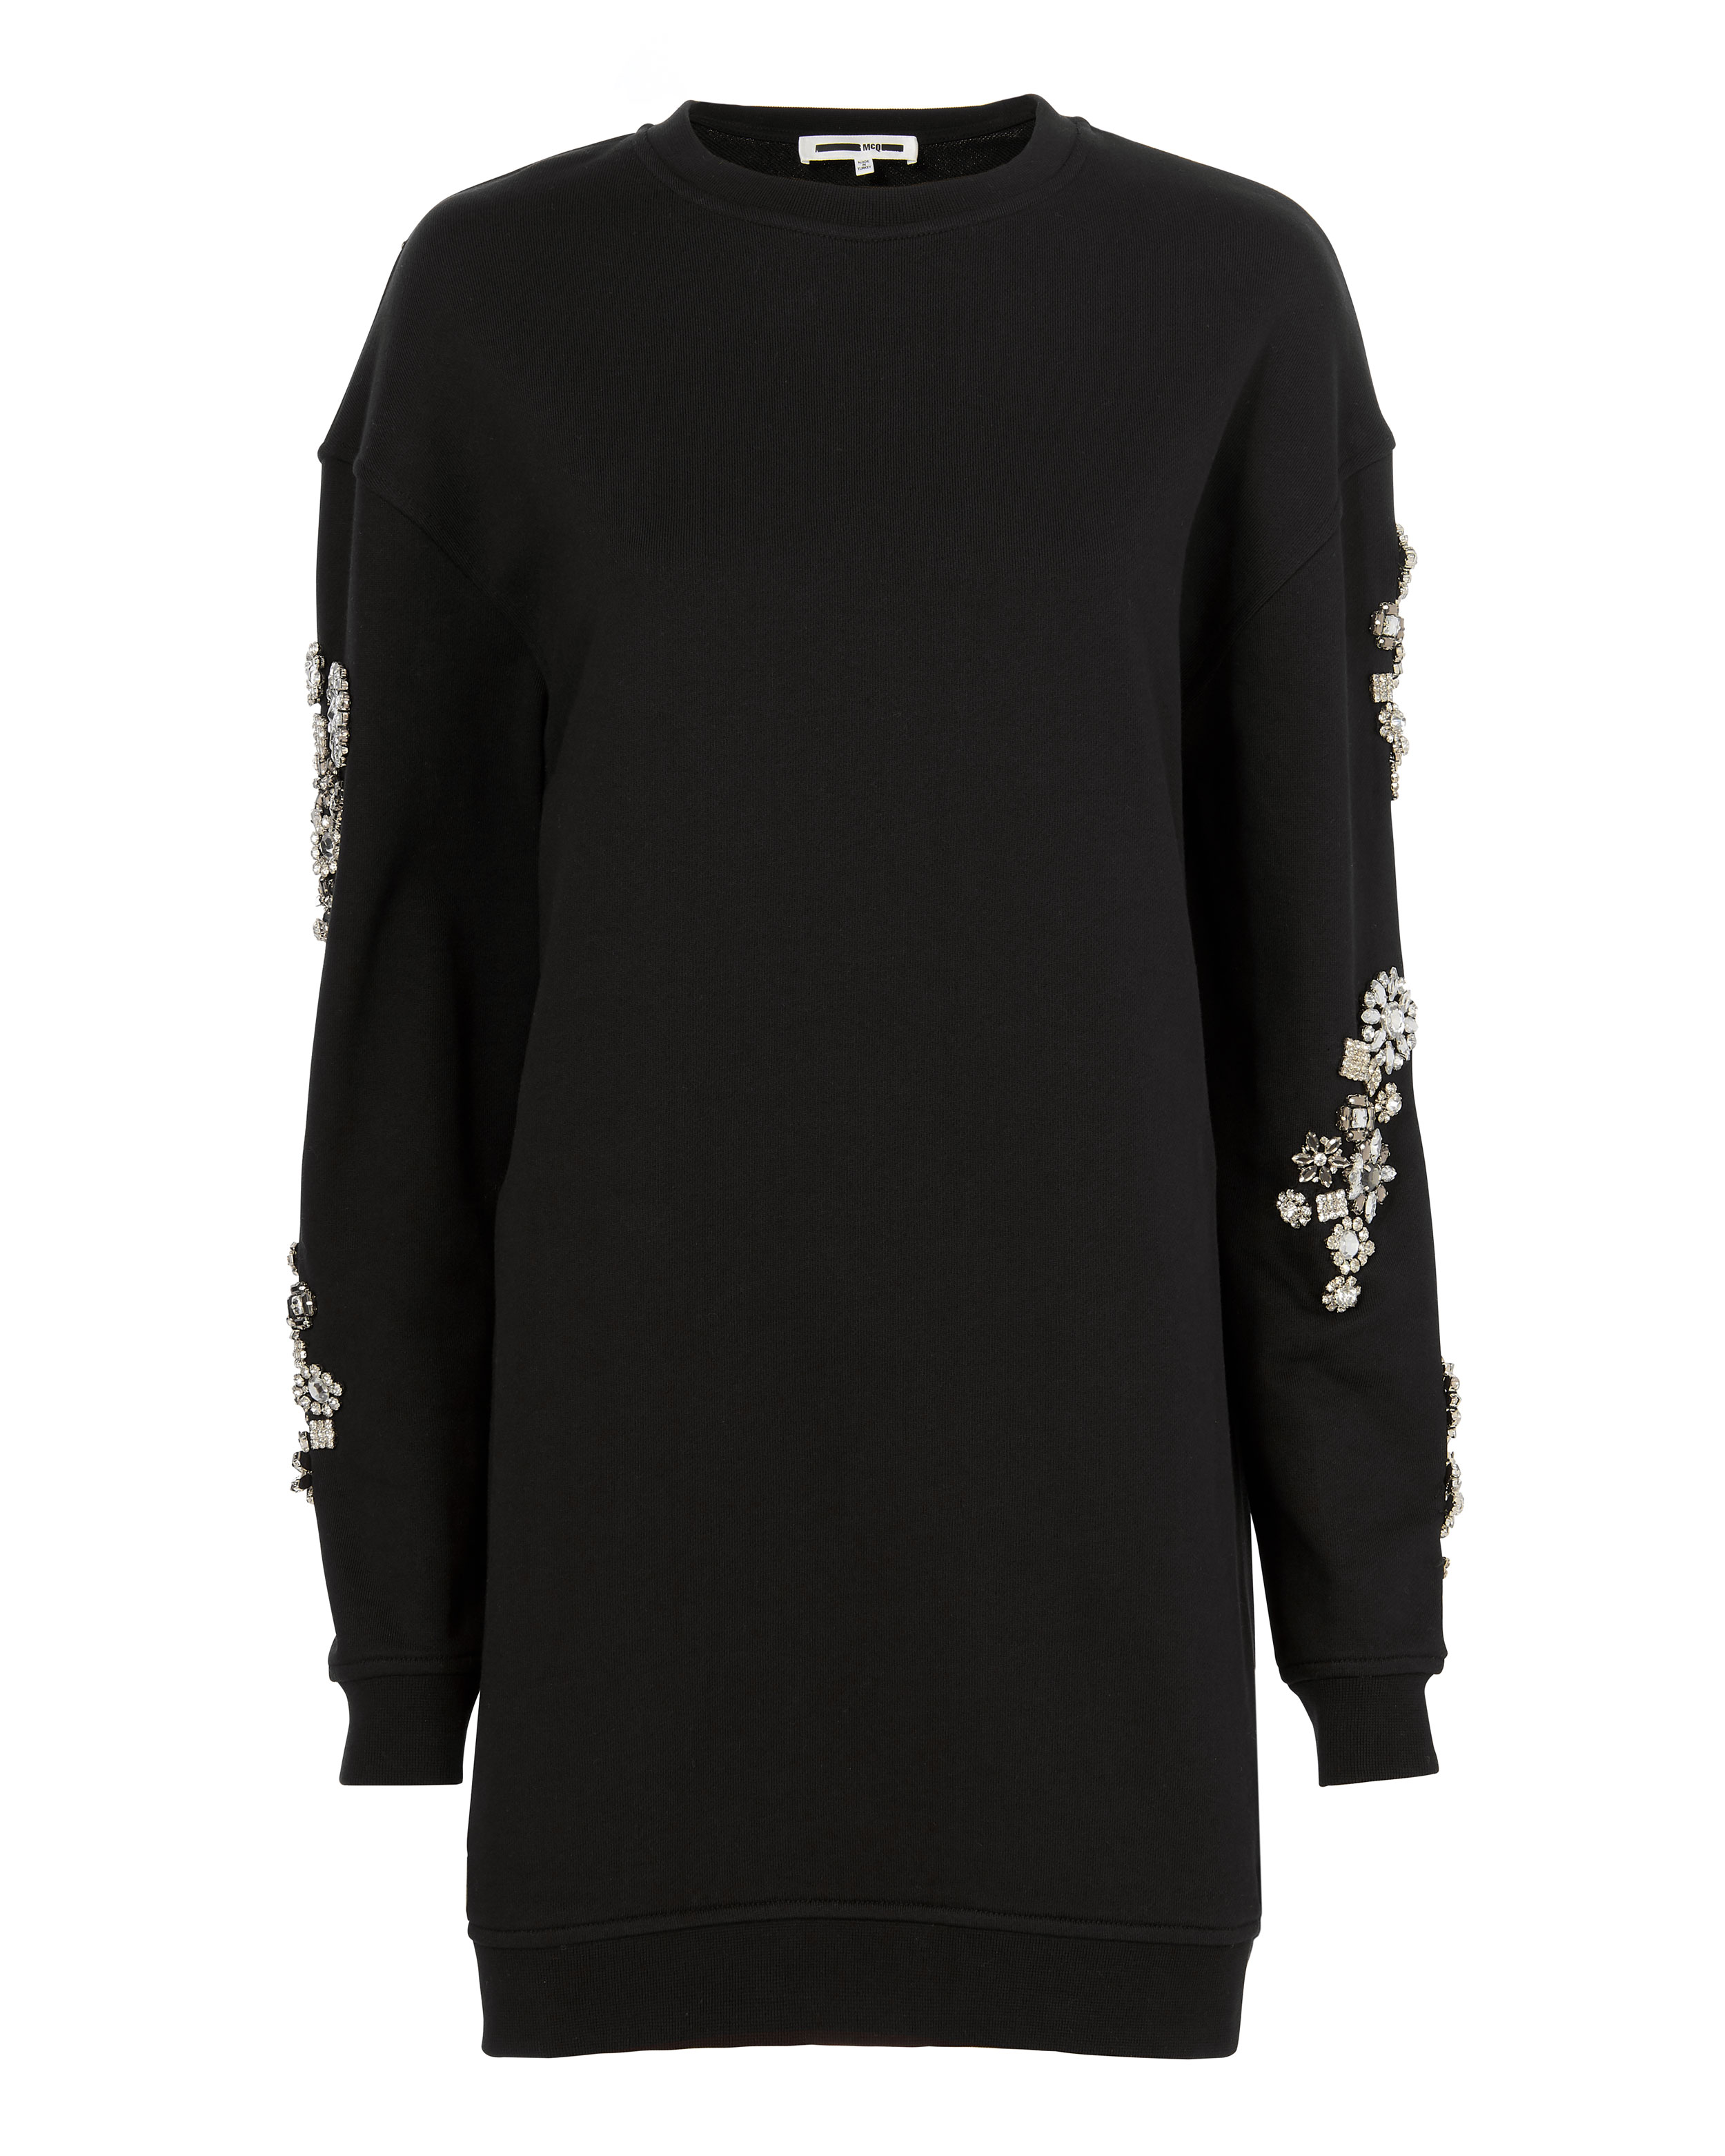 McQ by Alexander McQueen Crystal-Embellished Sweatshirt Dress in black ...